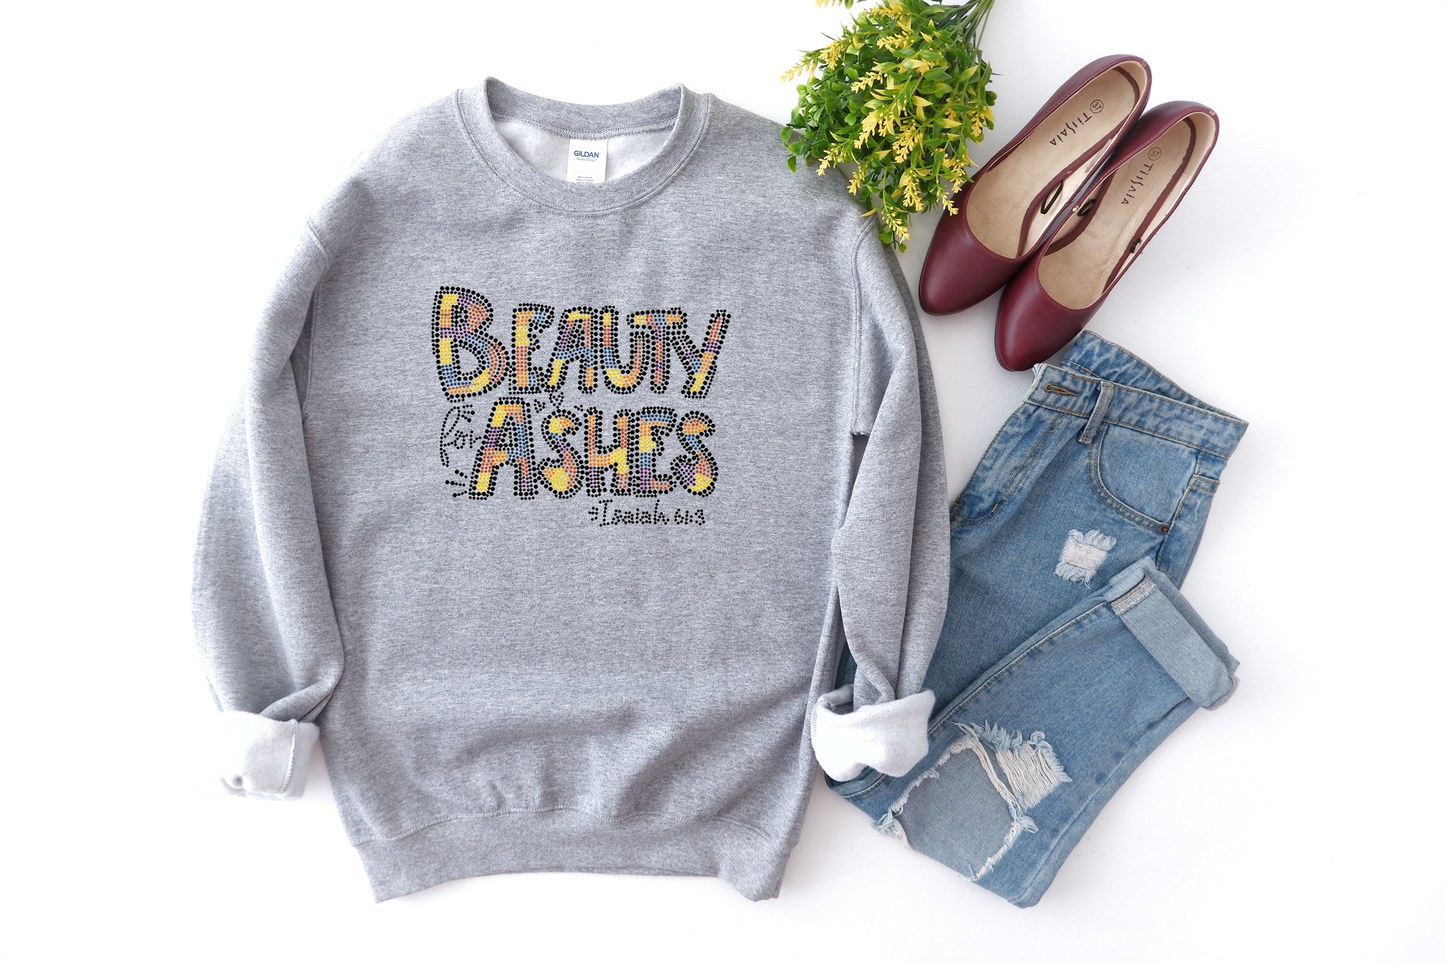 Beauty for Ashes Rhinestone hoodies/sweatshirts